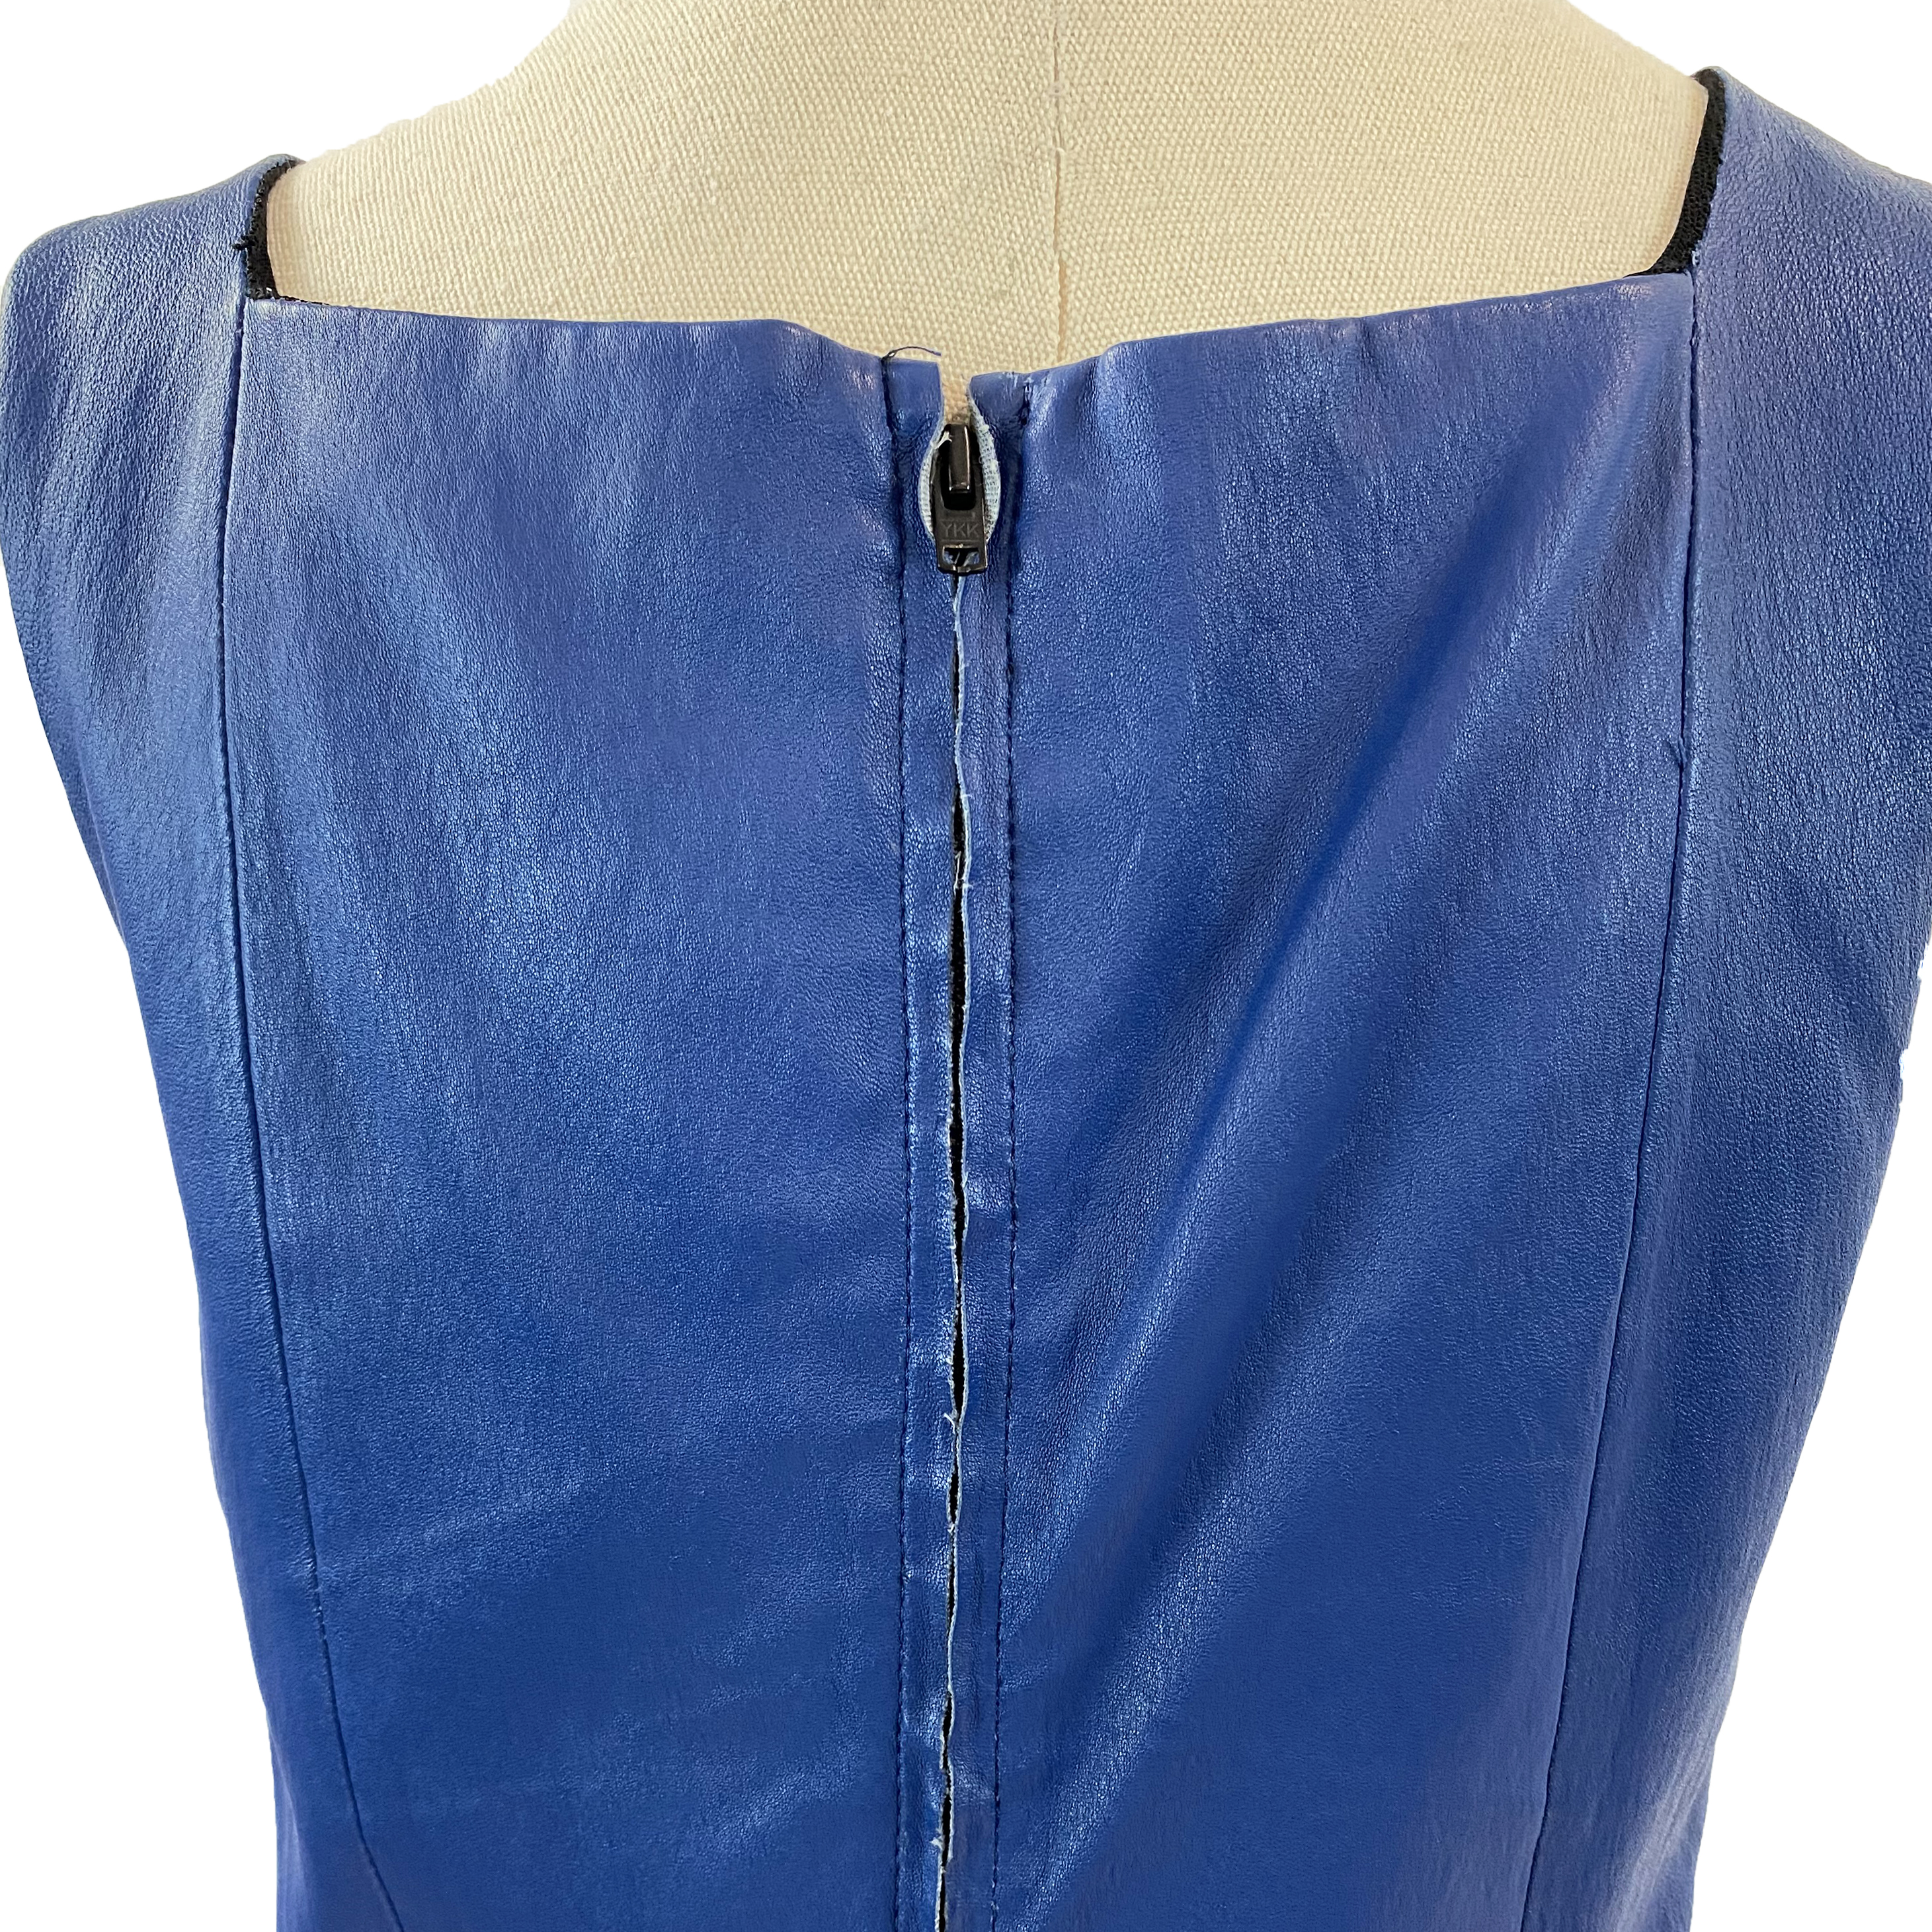 Scanlan & Theodore Blue Leather Dress